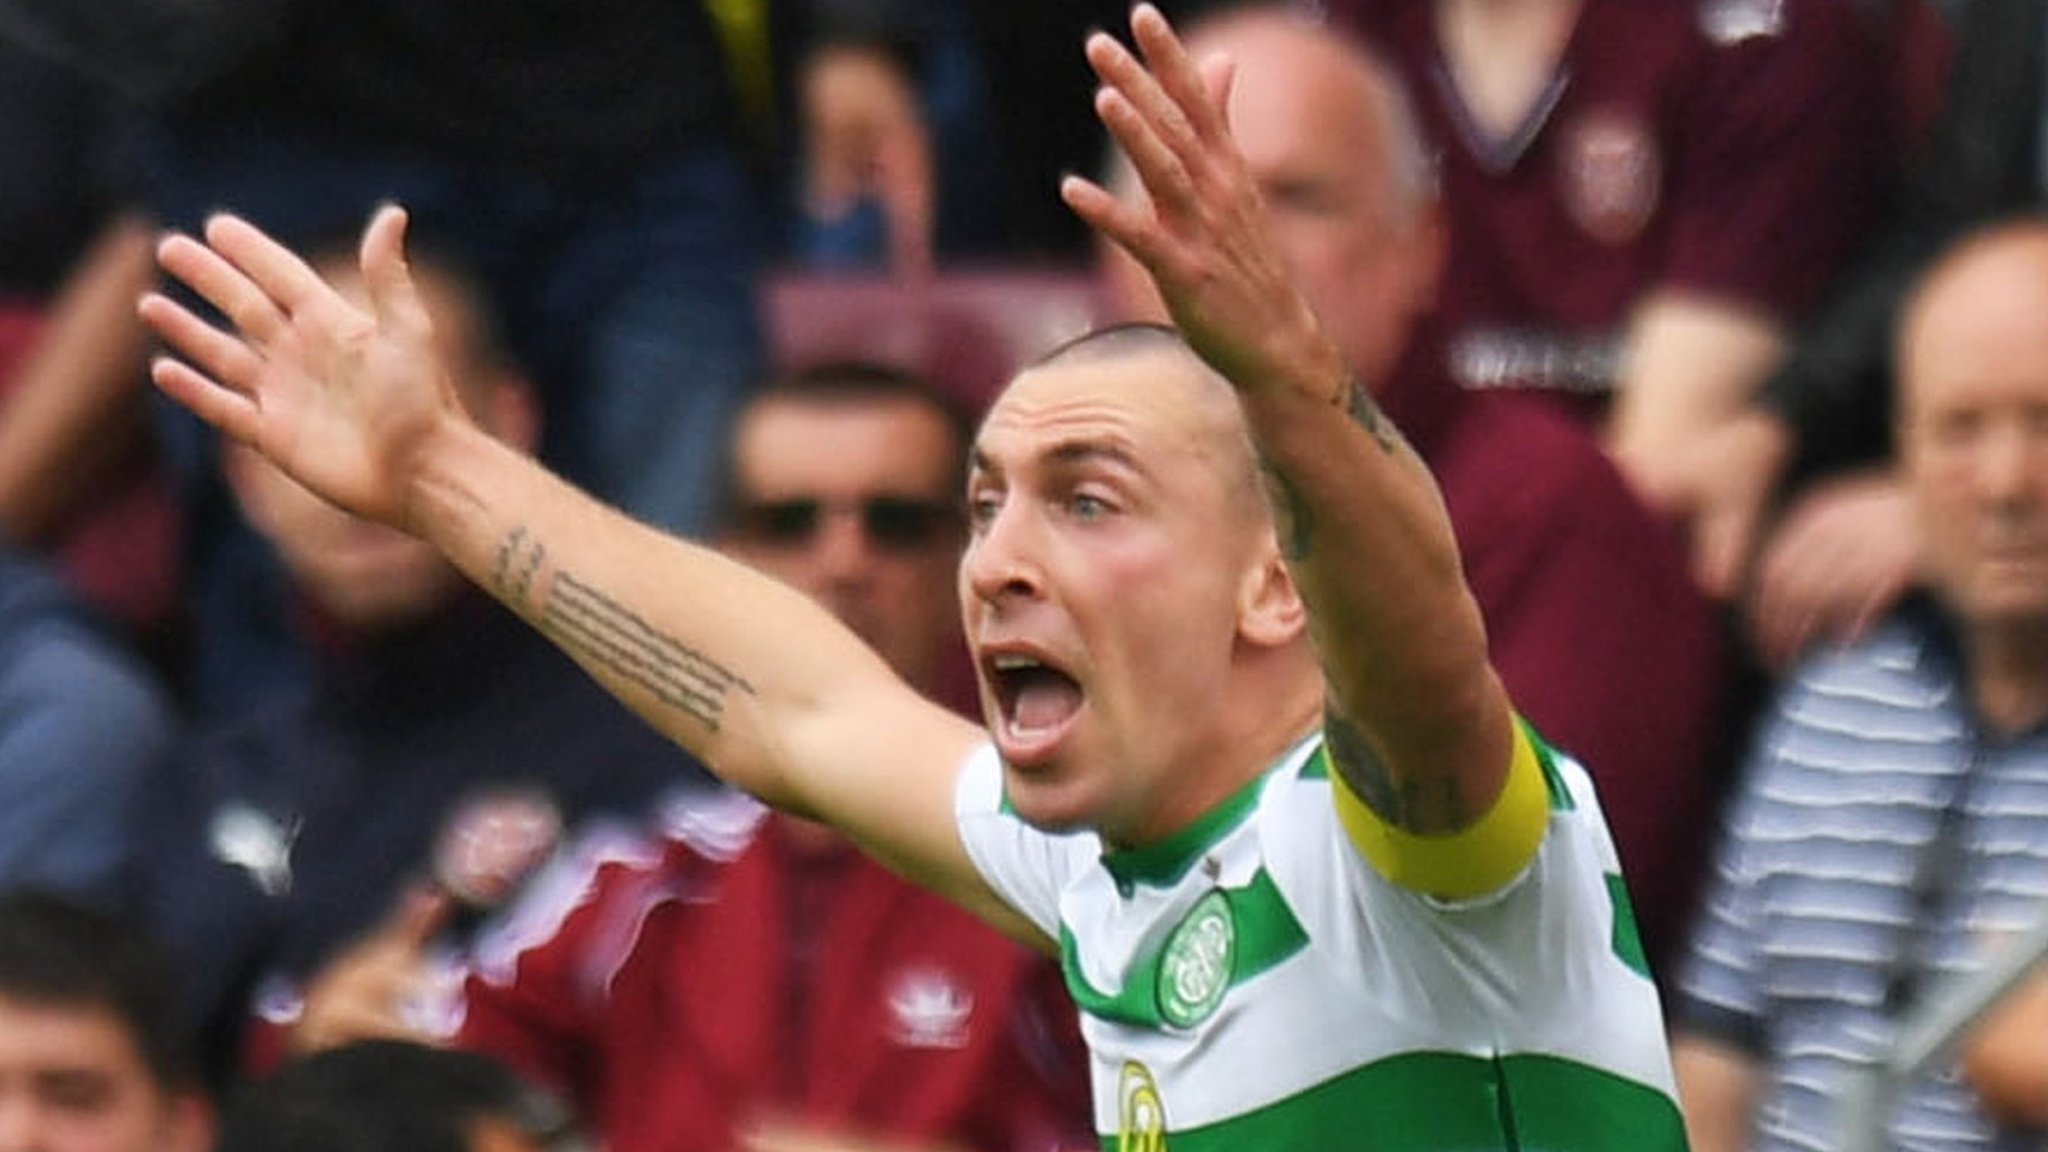 'This Celtic team need freshening up'